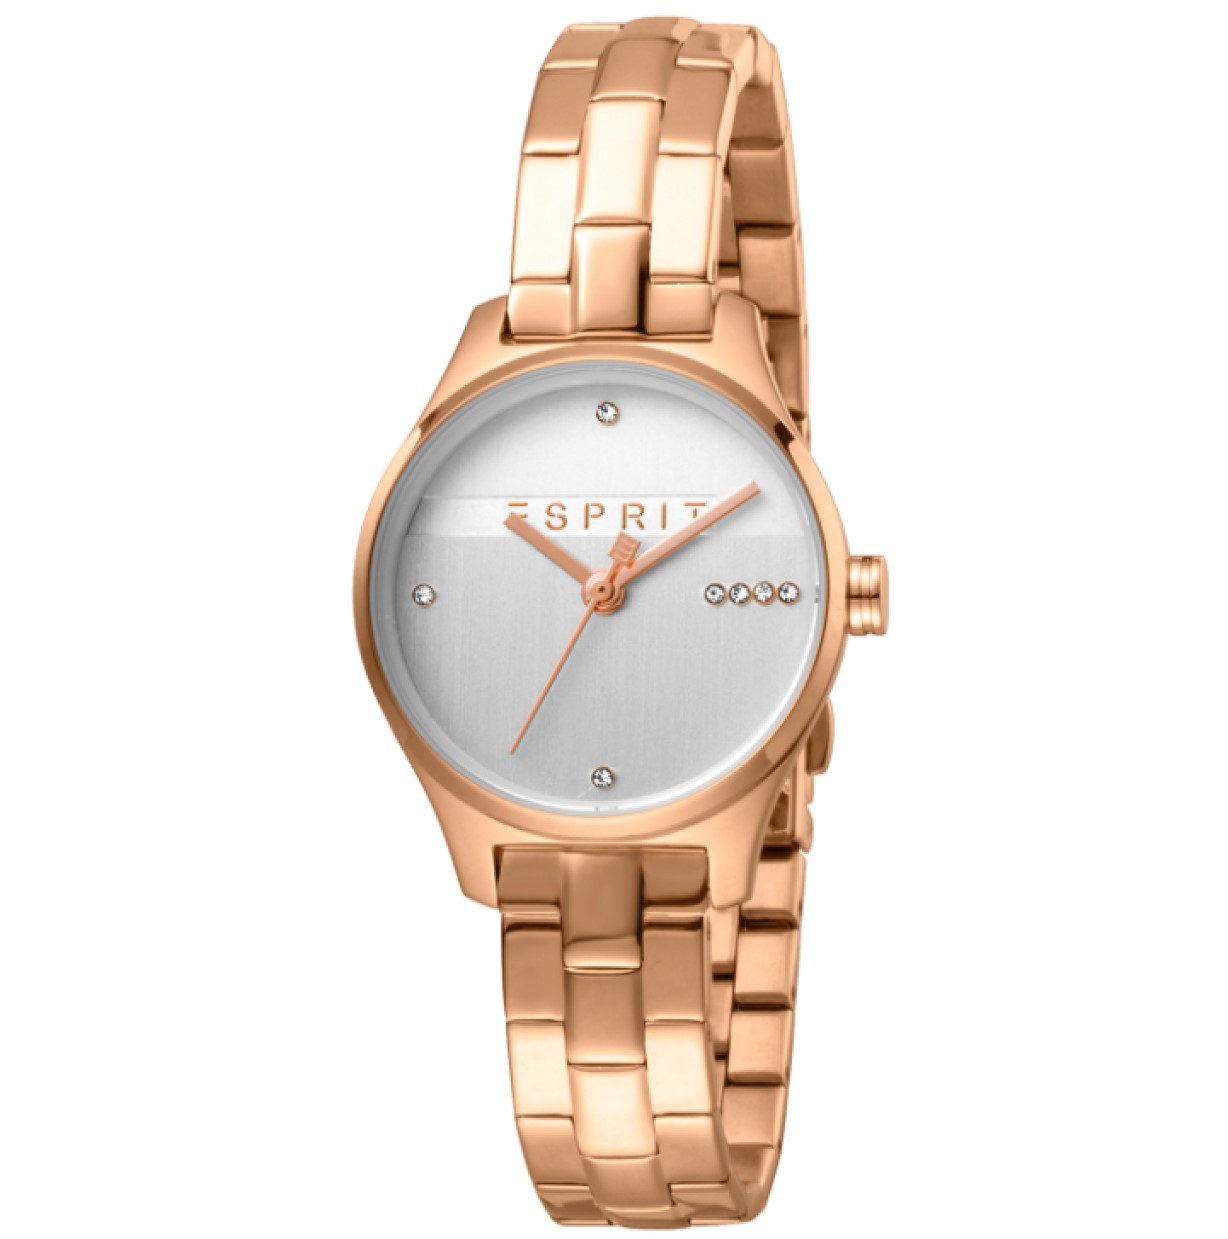 Esprit dames elegante horloge - roze goud kleur - 3ATM - polshorloge - ES1L054M0075